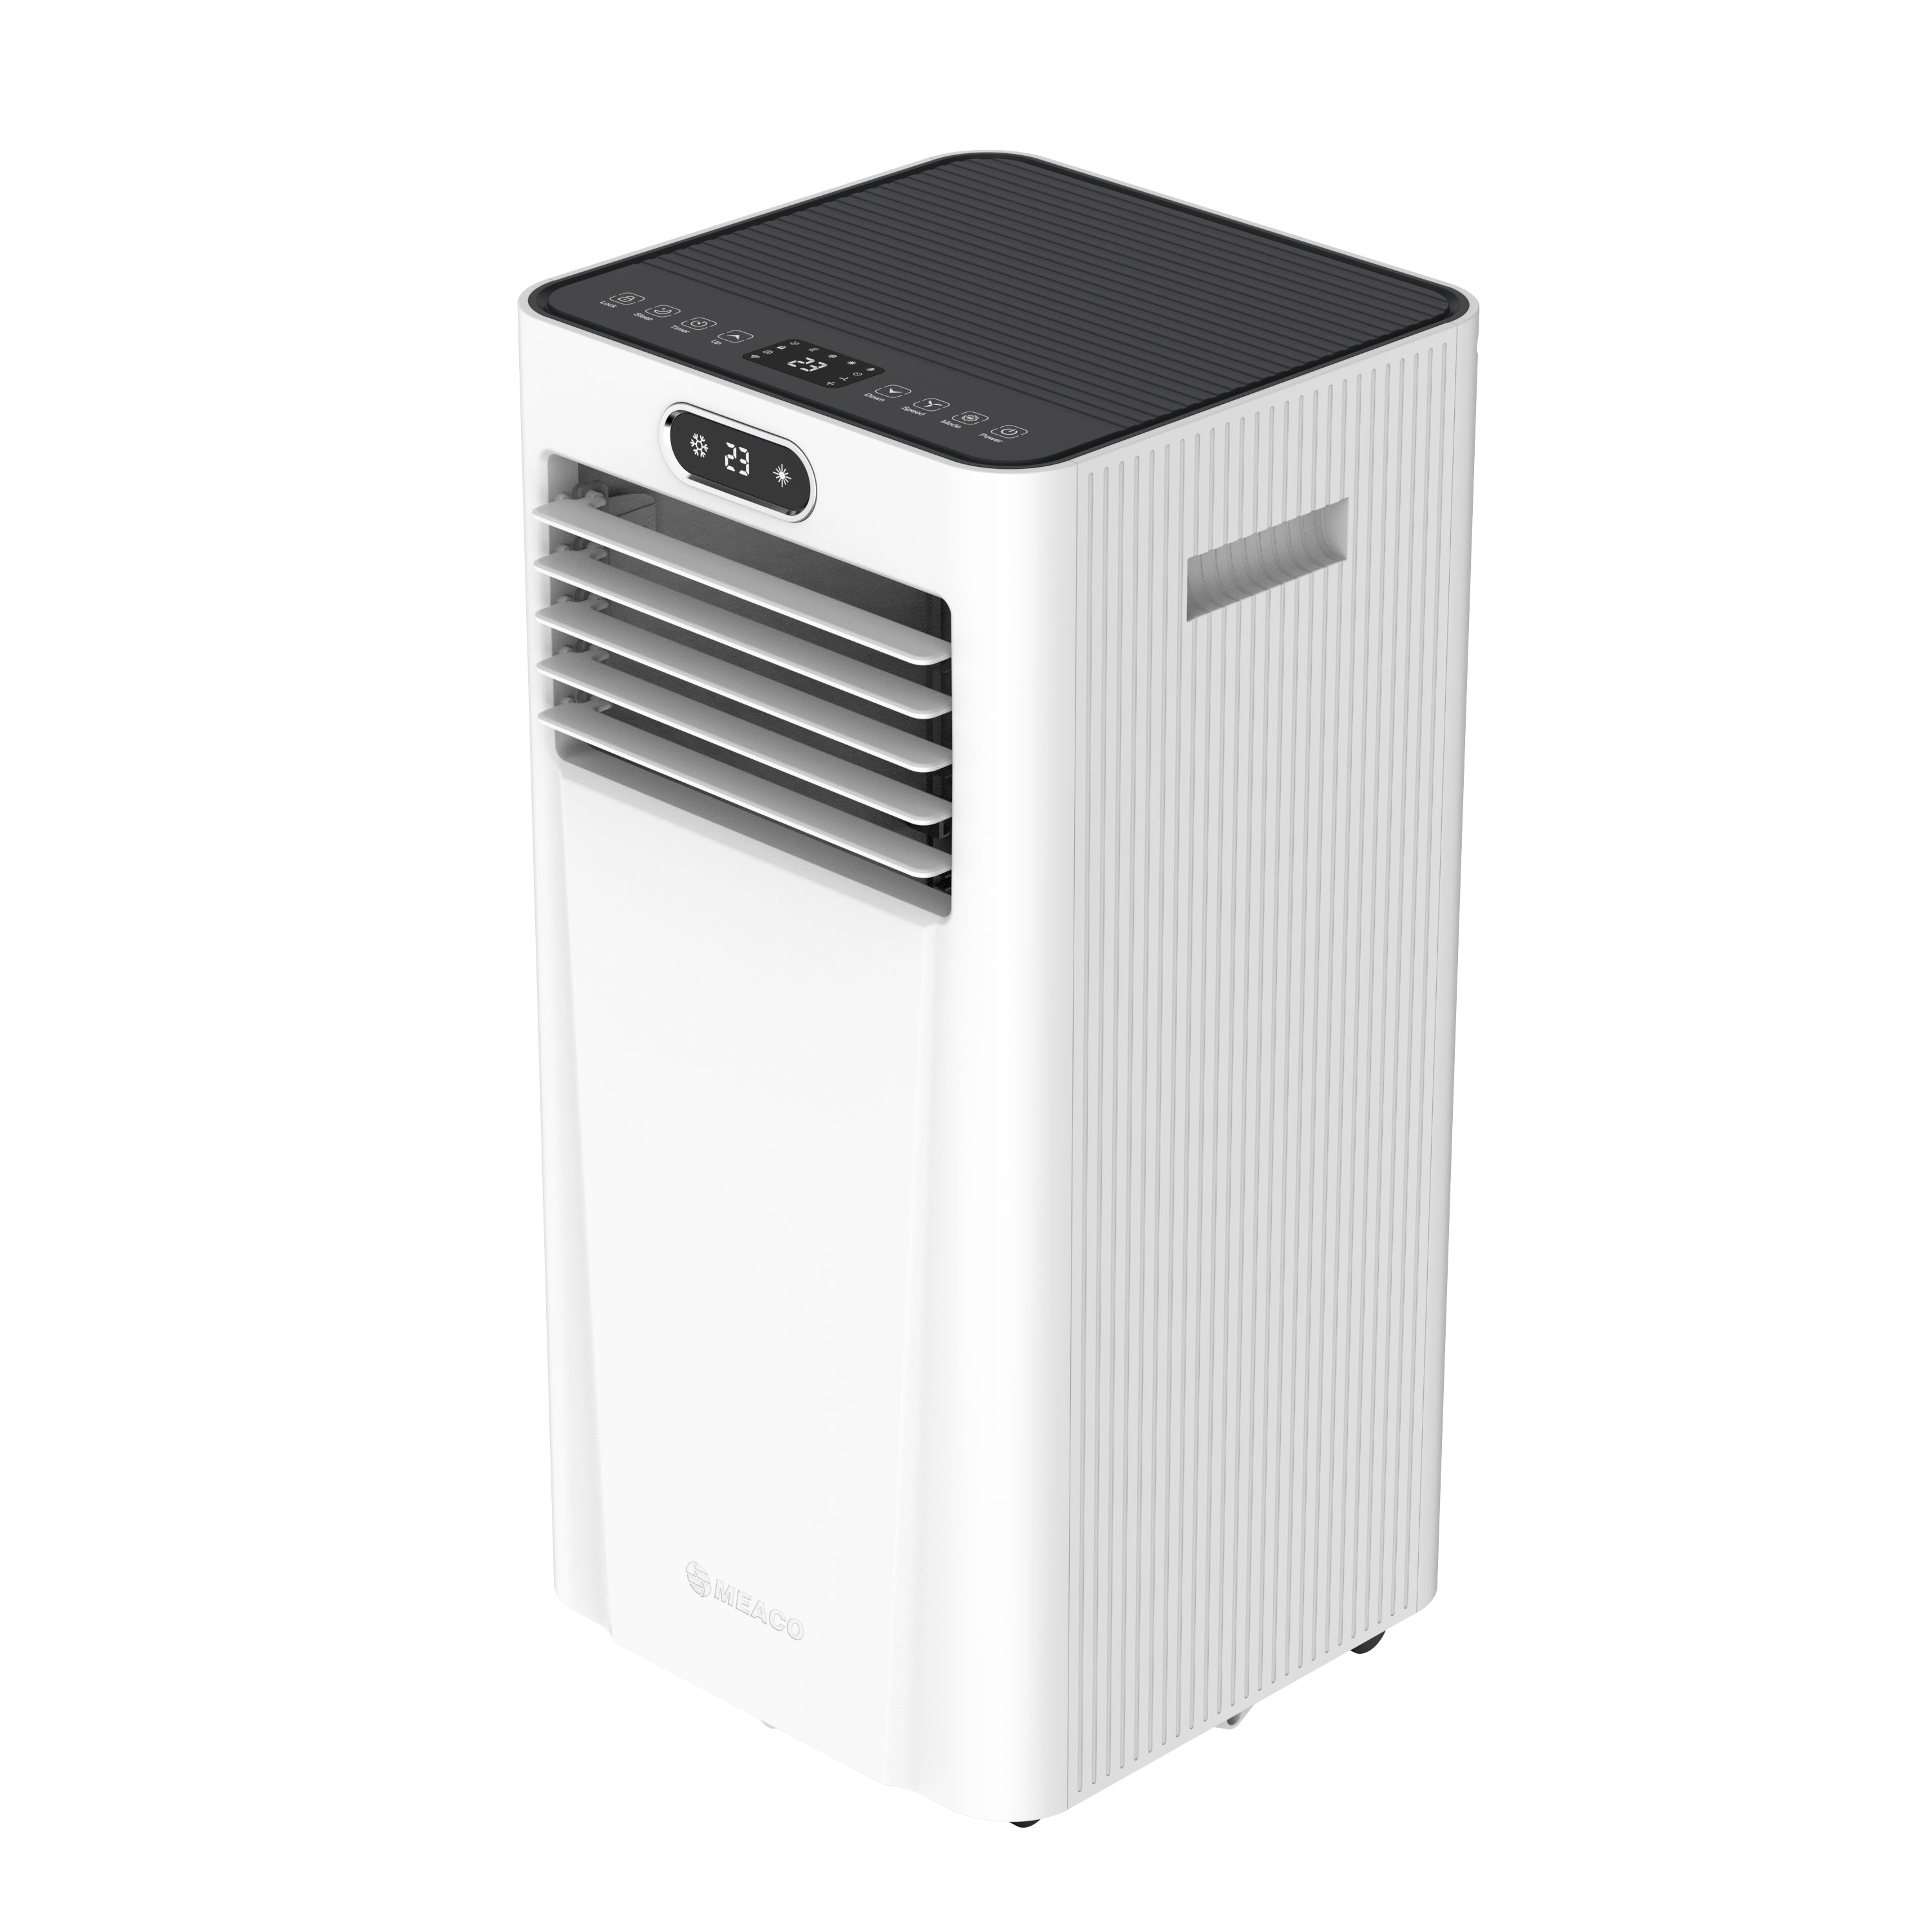 MeacoCool MC Series Pro 10000 BTU Portable Air Conditioner